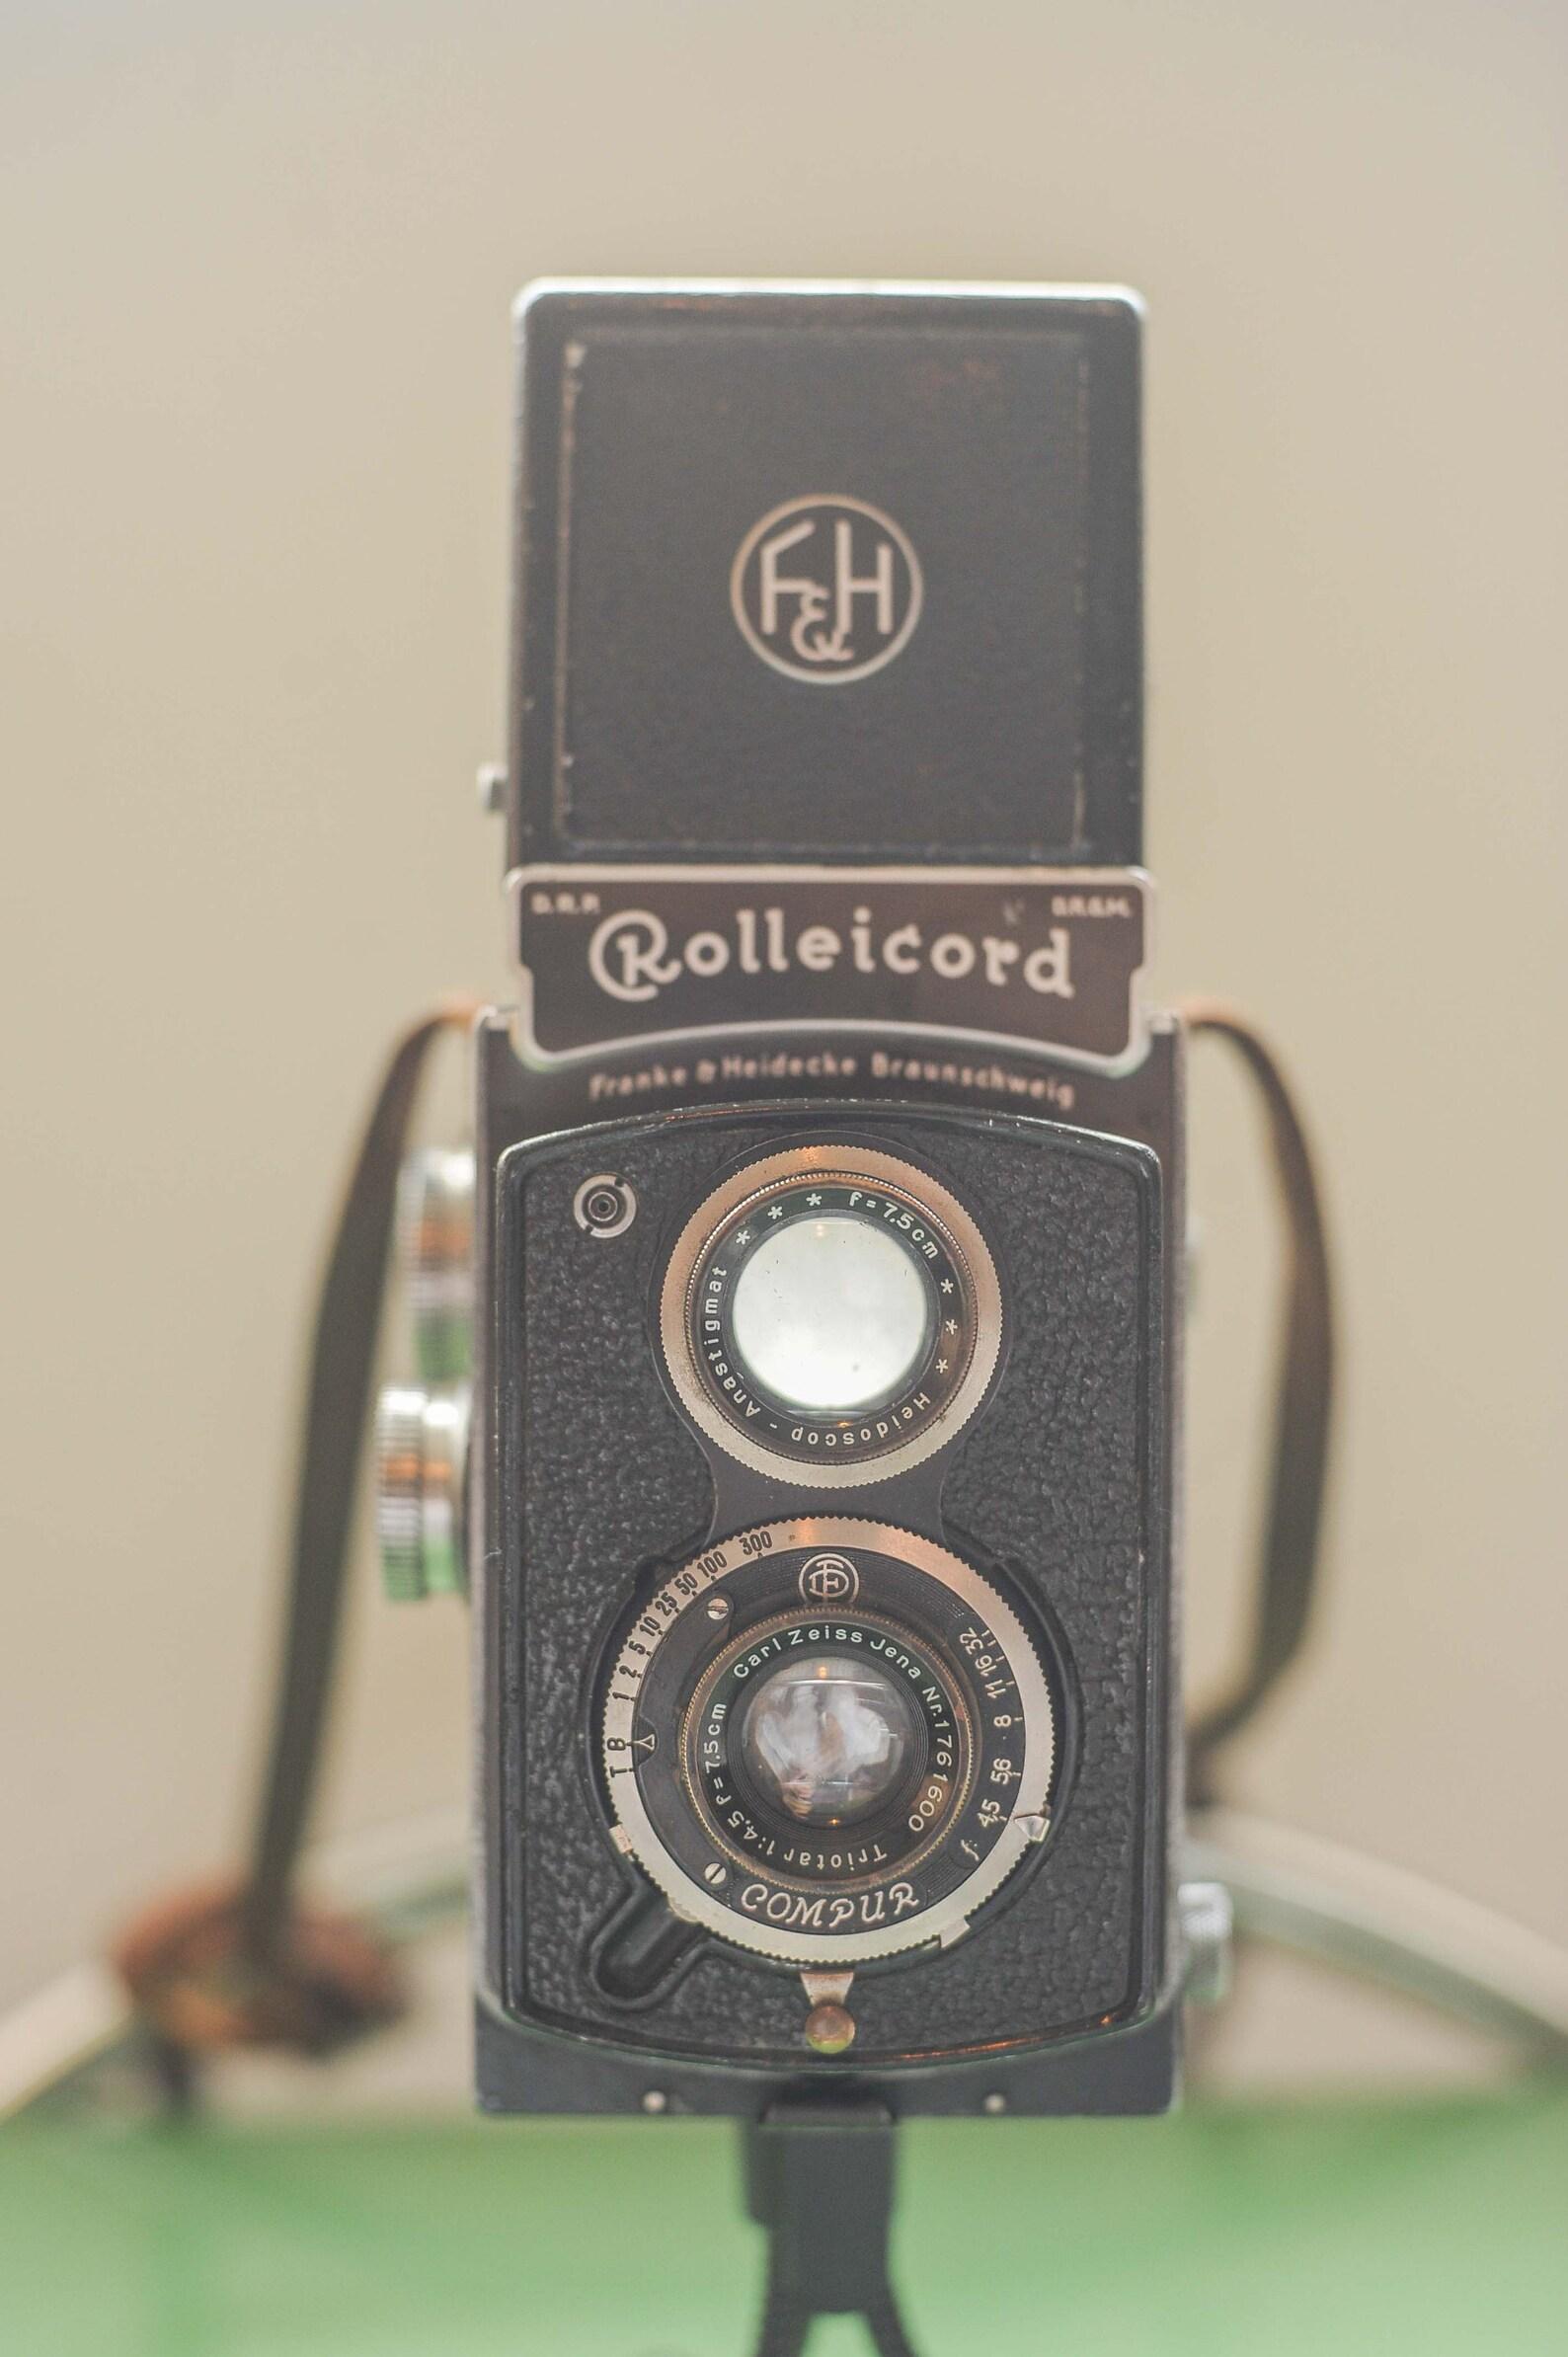 Franke & Heidecke Rolleicord Ia Modell 1 - Modell K3 - 520 Doppellinsen-Spiegelreflexkamera 120 Blatt Filmkamera Made in Germany 1936-1937


Highslide JSMärz 1936 - Mai 1937, 9.459 Stück.
Seriennummern: 1.760.000 - 1.947.000, eingraviert im